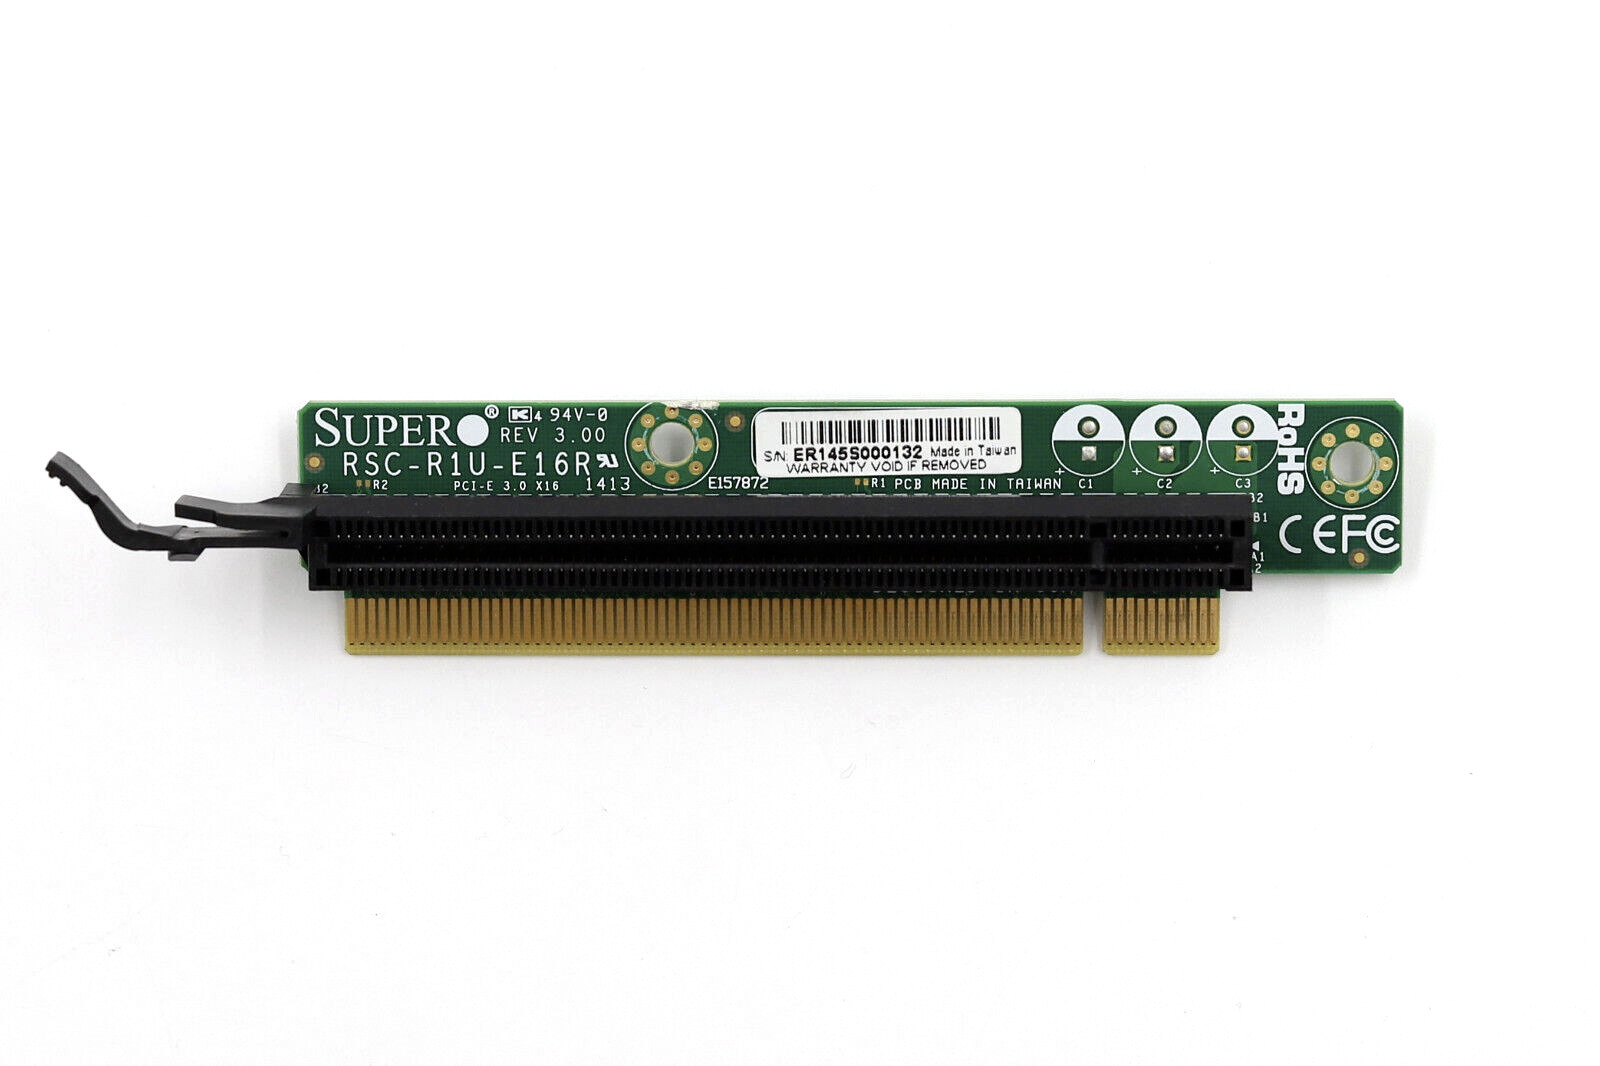 SuperMicro RSC-R1U-E16R 1U 2-Slot PCIe Riser Card Tested Working